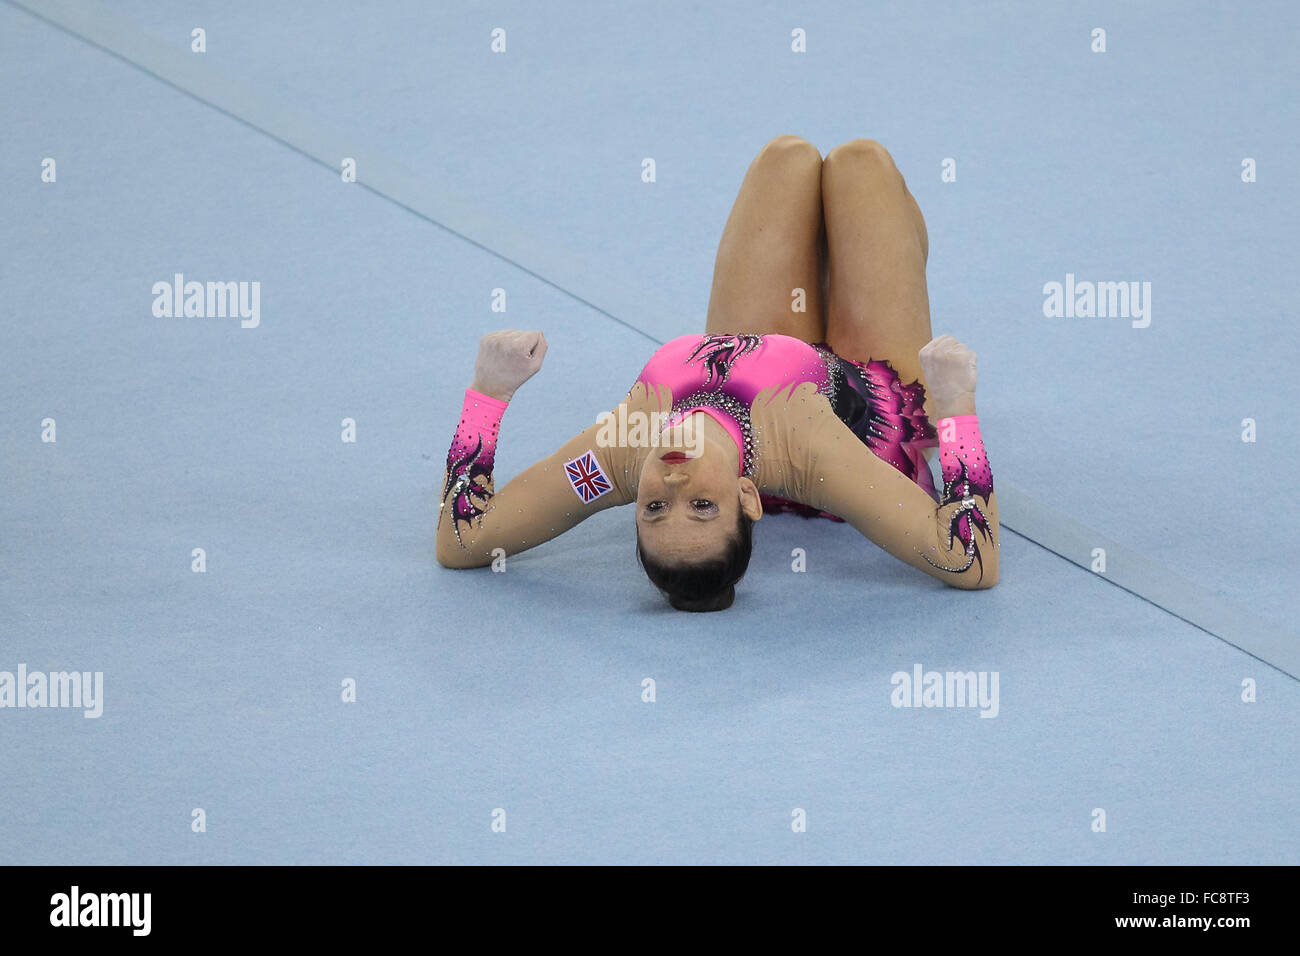 Great Britain. Women's Group All-Around Acrobatic Gymnastics. National Gymnastics Arena. Baku2015. 1st European Games. Baku. Azerbaijan. 19/06/2015. Stock Photo